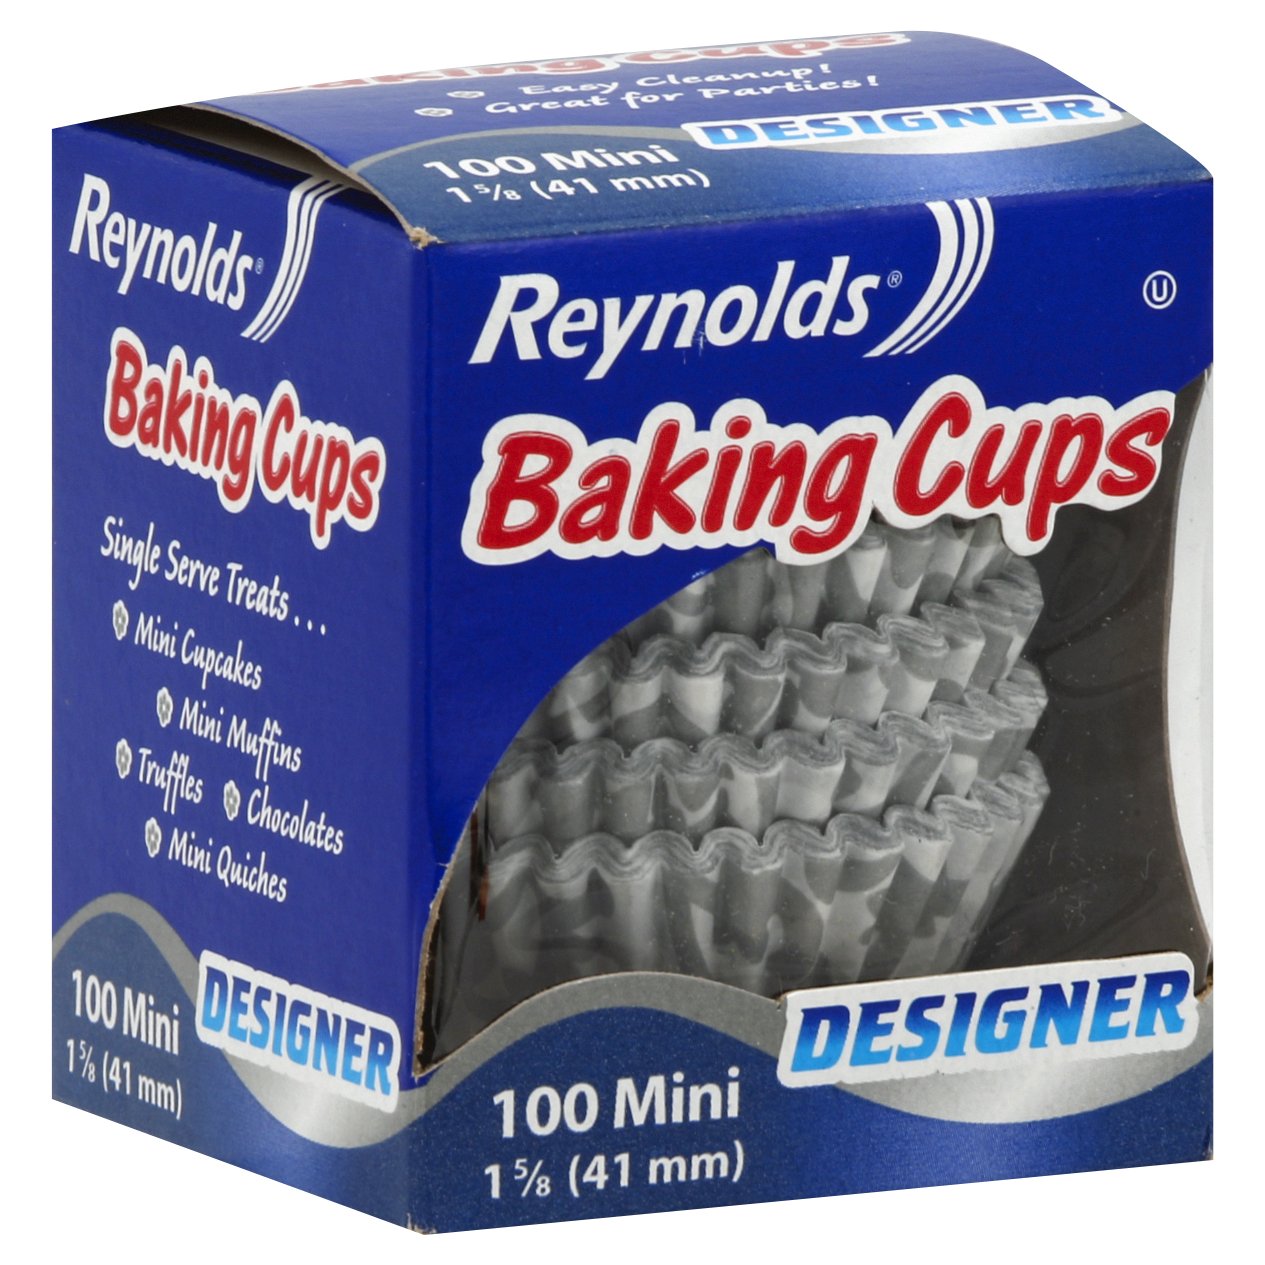 Reynolds Baking Cups - Designer - 100 Mini - 41 mm - Pack of 4